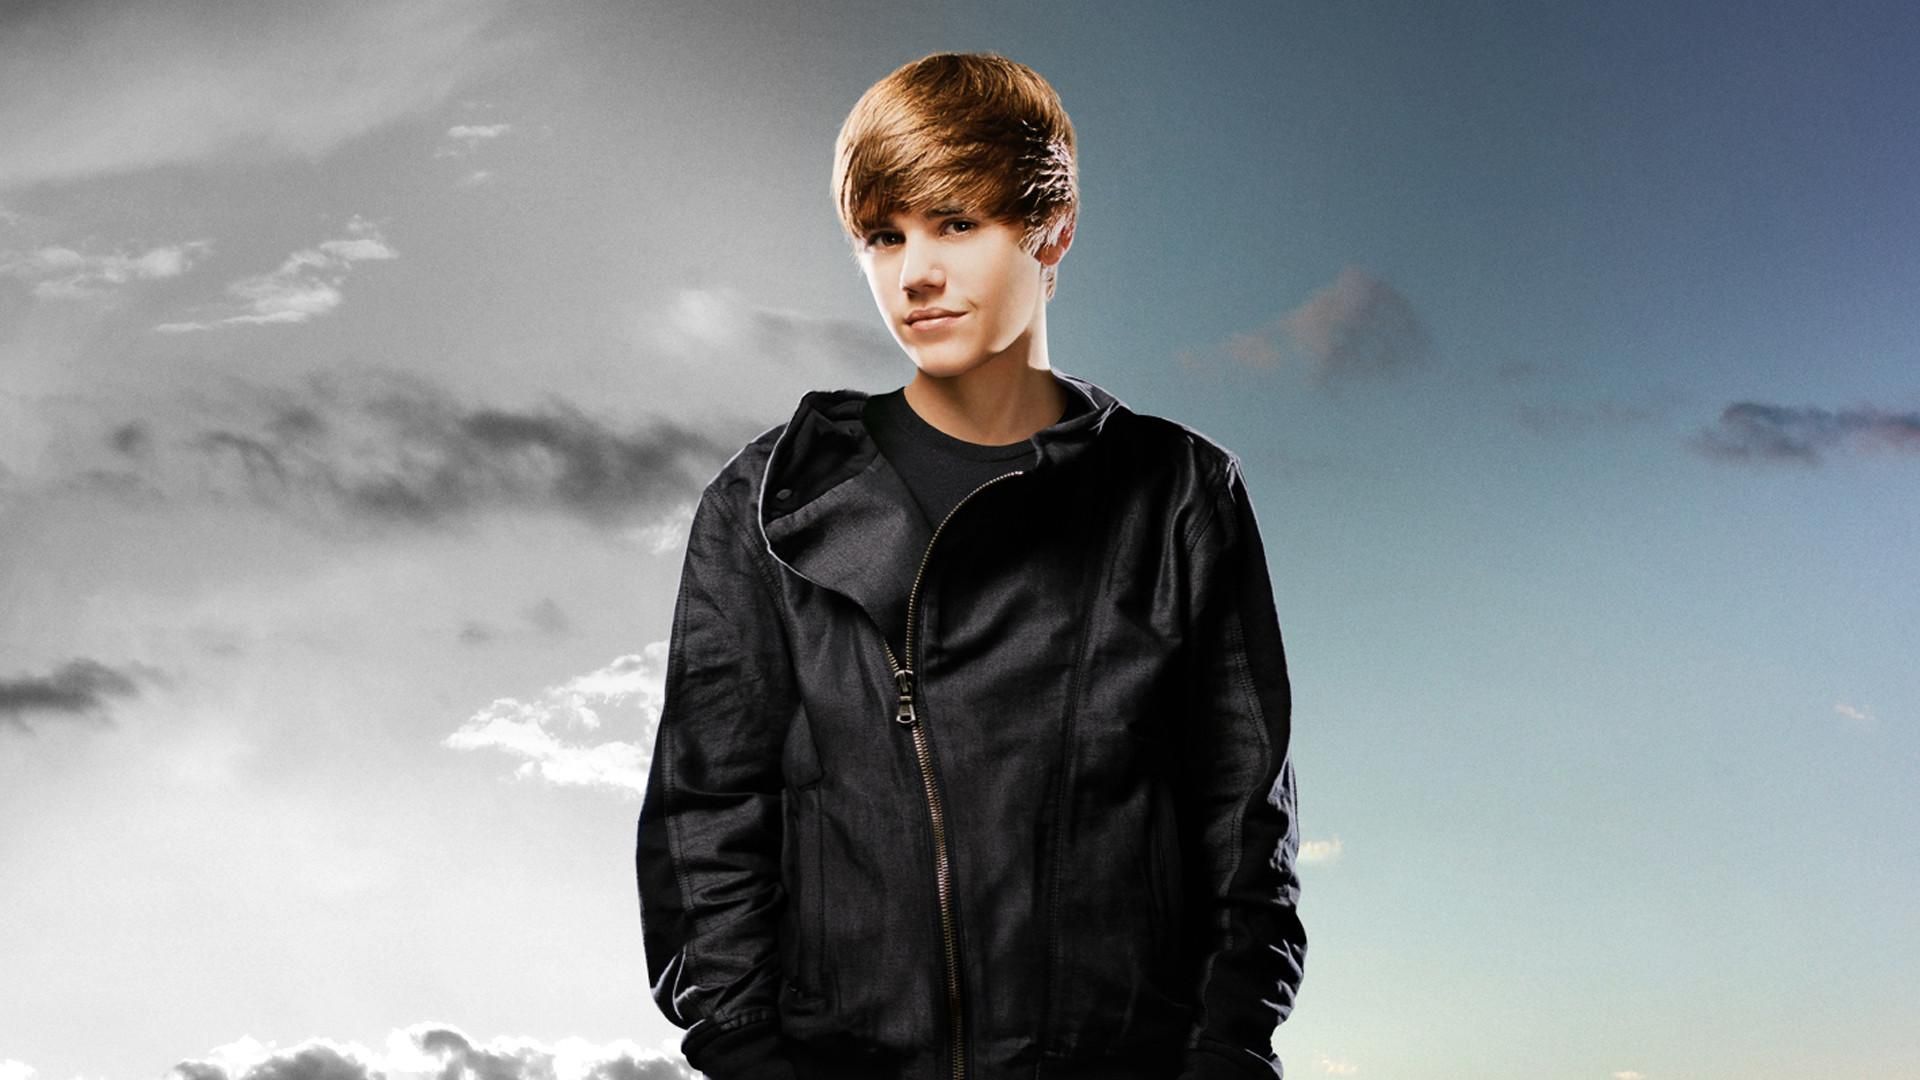 Justin Bieber Never Say Never Movie wallpaper. Justin bieber, Streaming movies, Movies